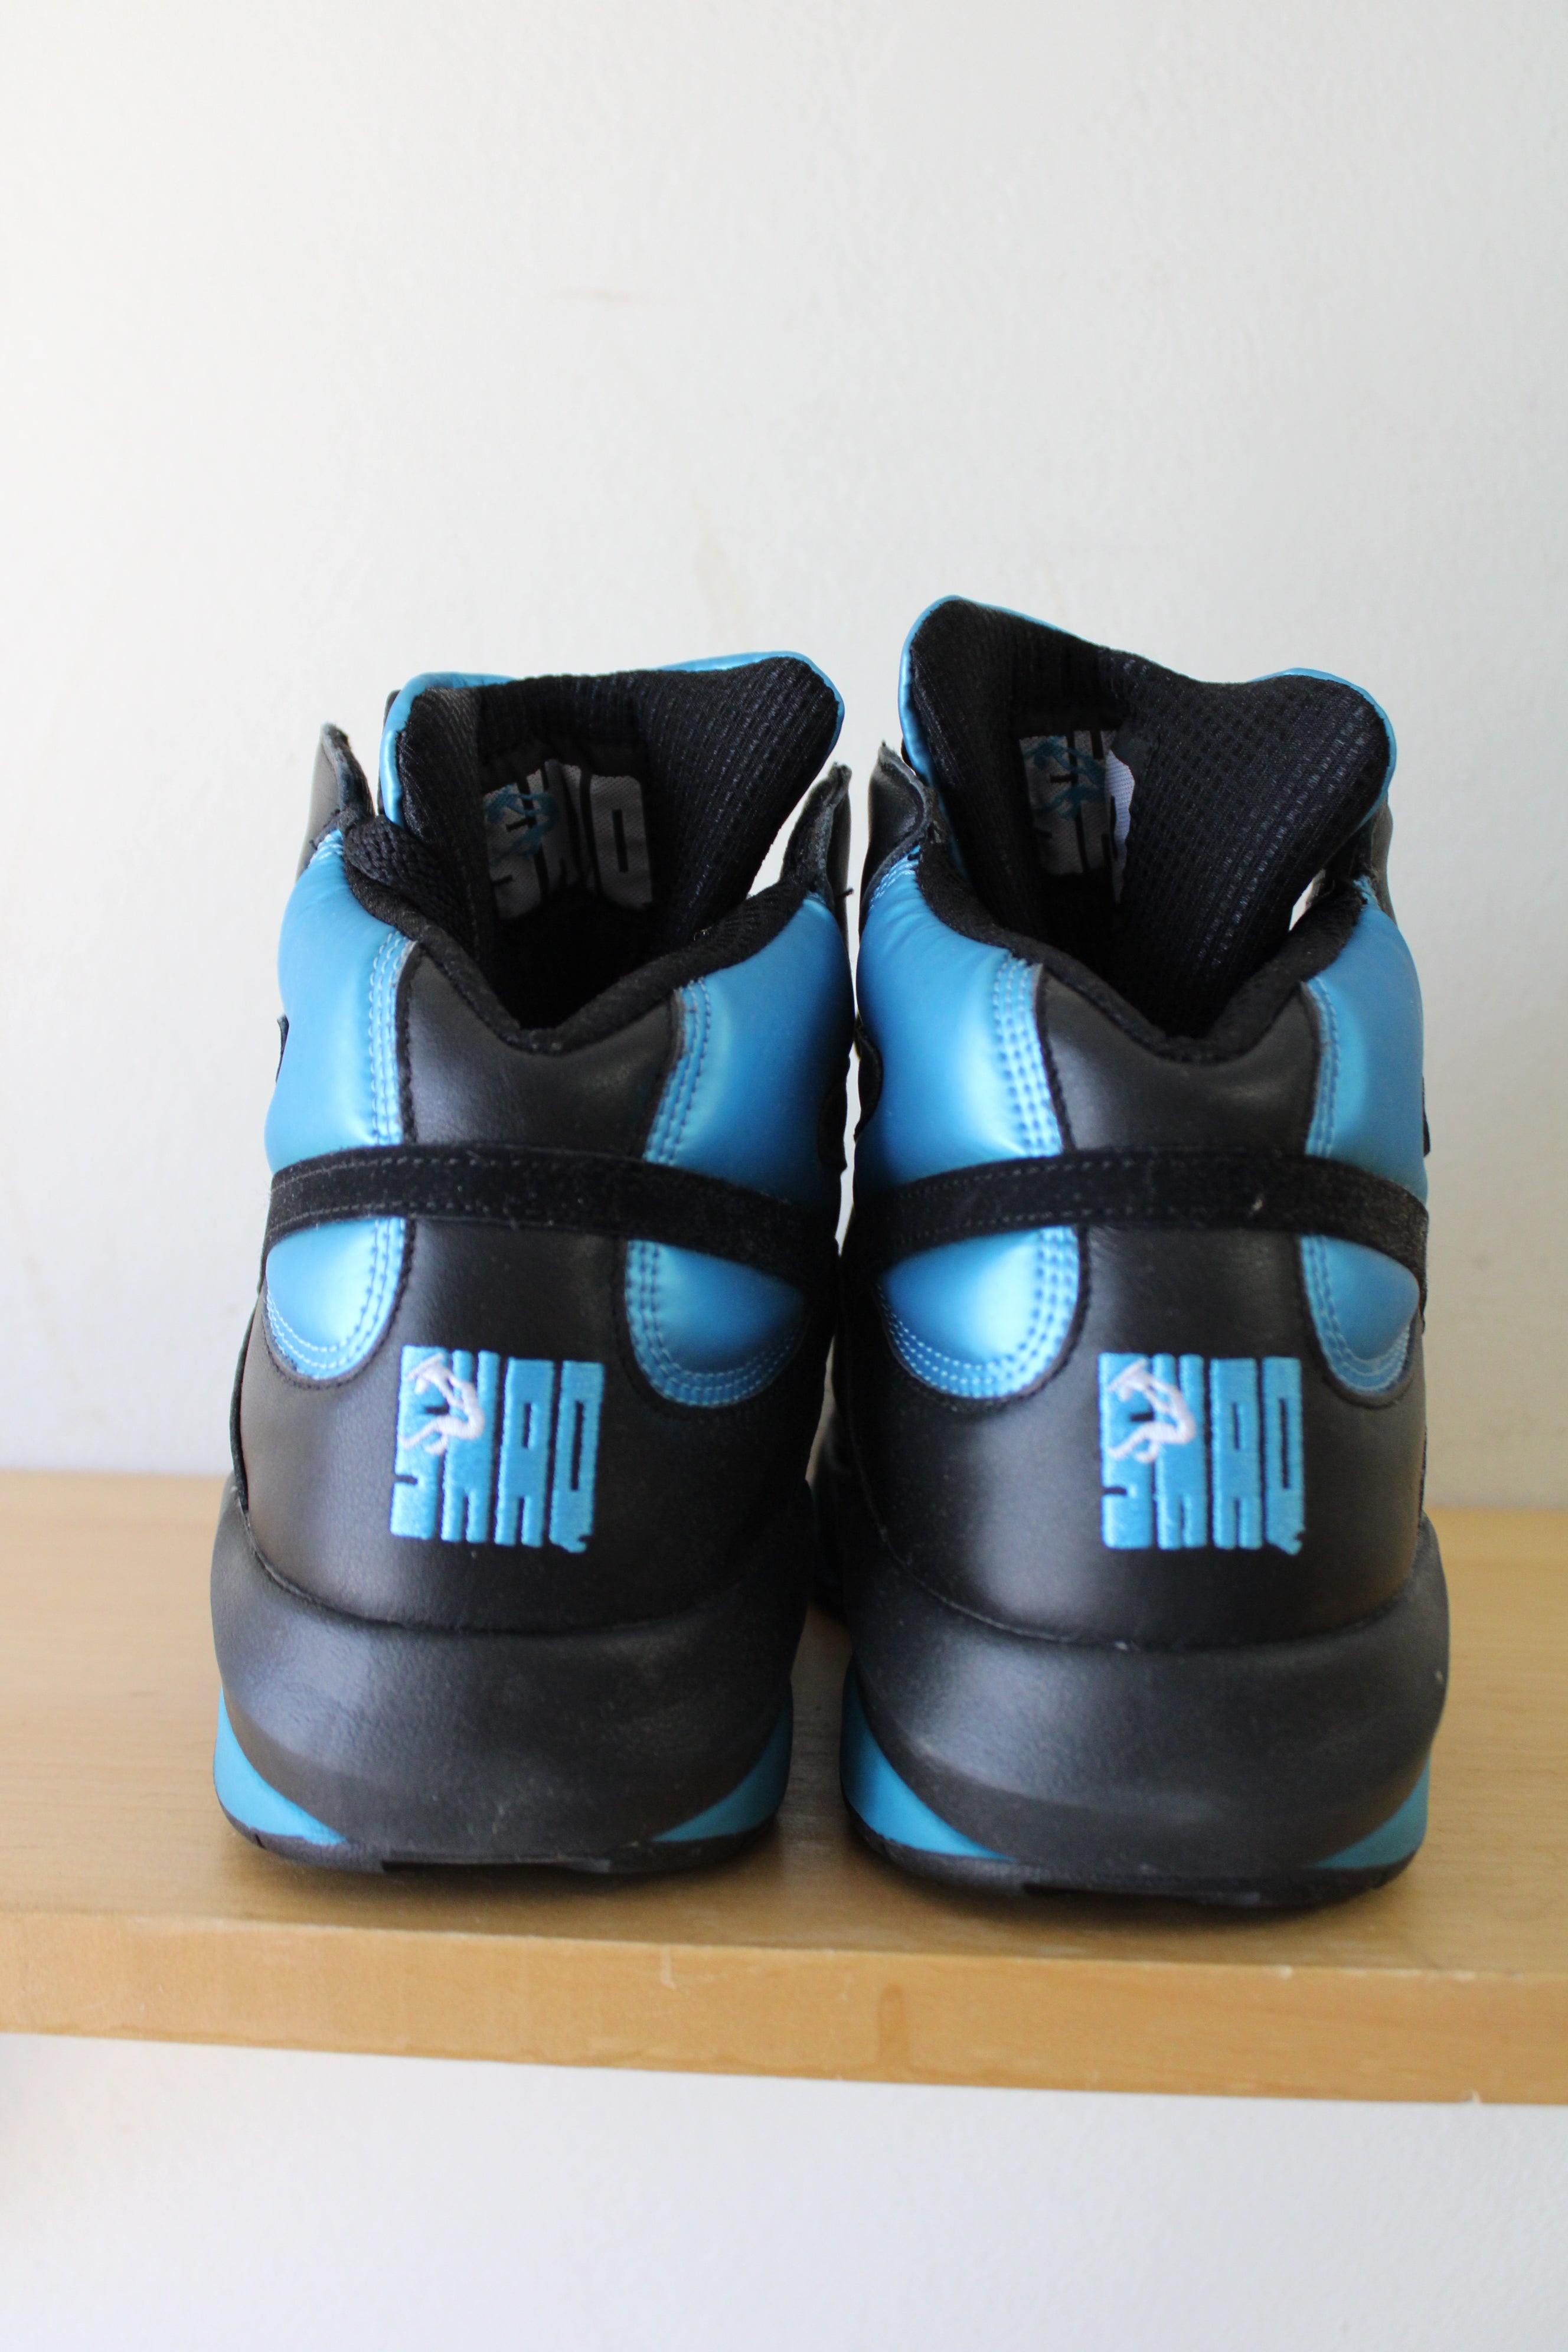 Reebok Pump Shaq Attack 1 Black Azure Blue Orlando Magic Sneakers | Men's 9